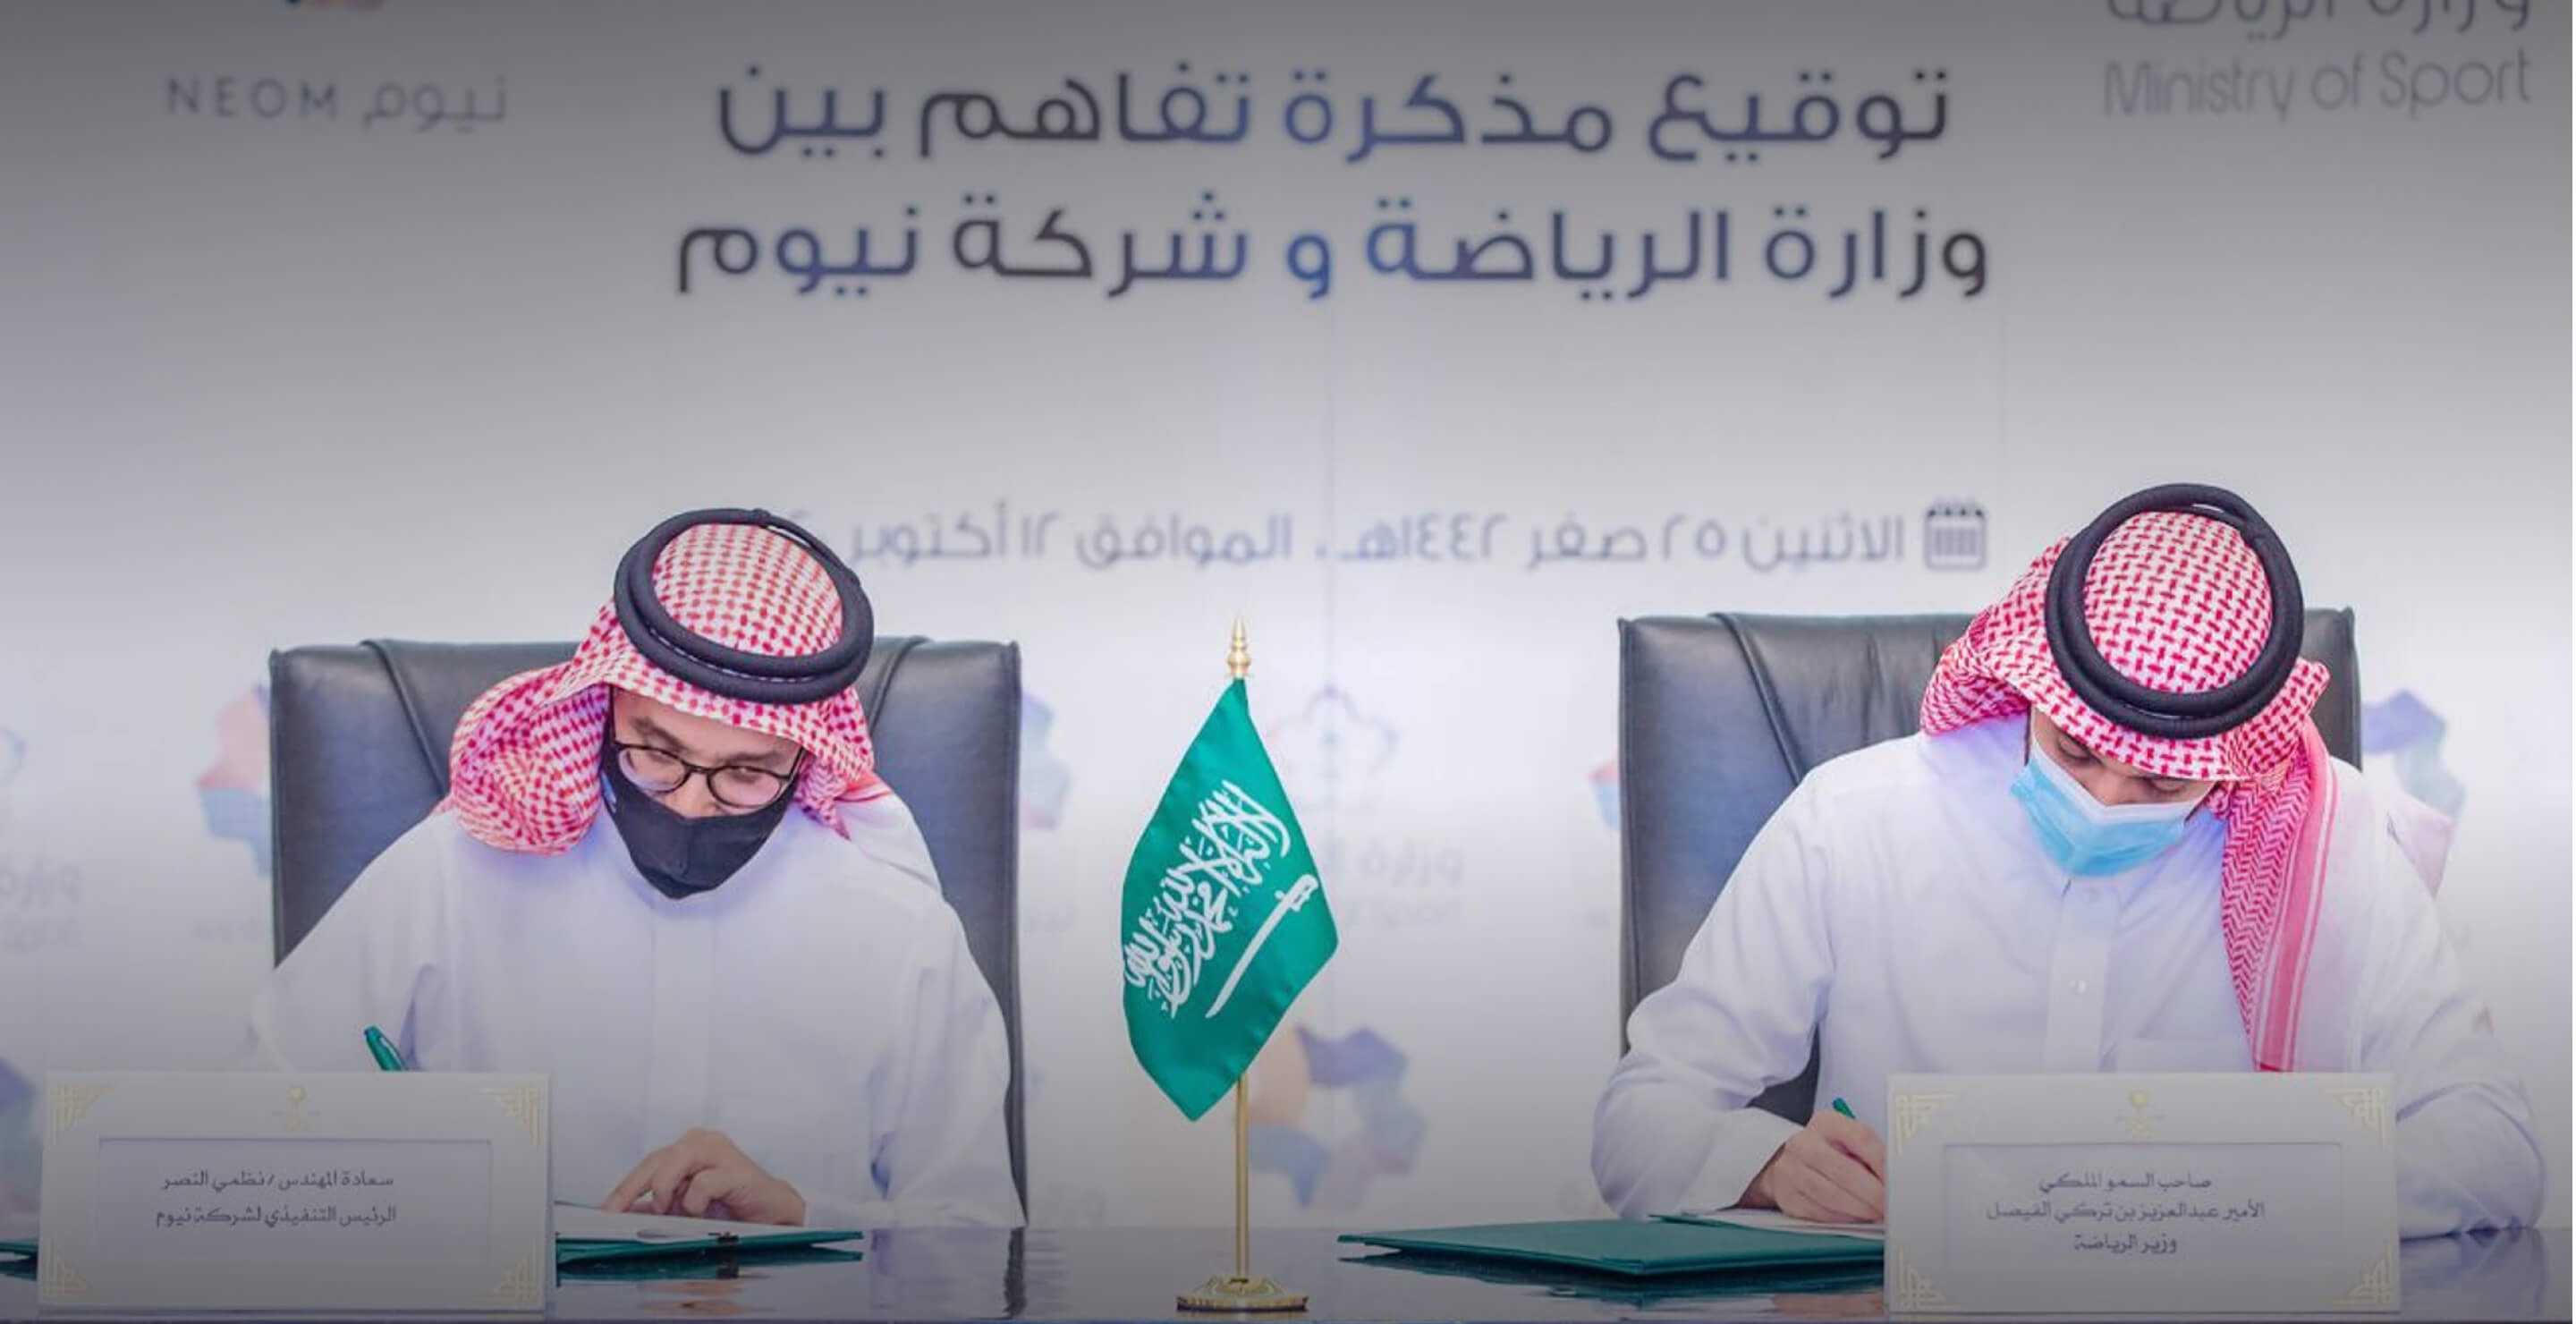 His Royal Highness Prince Abdulaziz bin Turki Al-Faisal, Minister of Sport, and Nadhmi Al-Nasr, CEO of NEOM, signing the MoU.